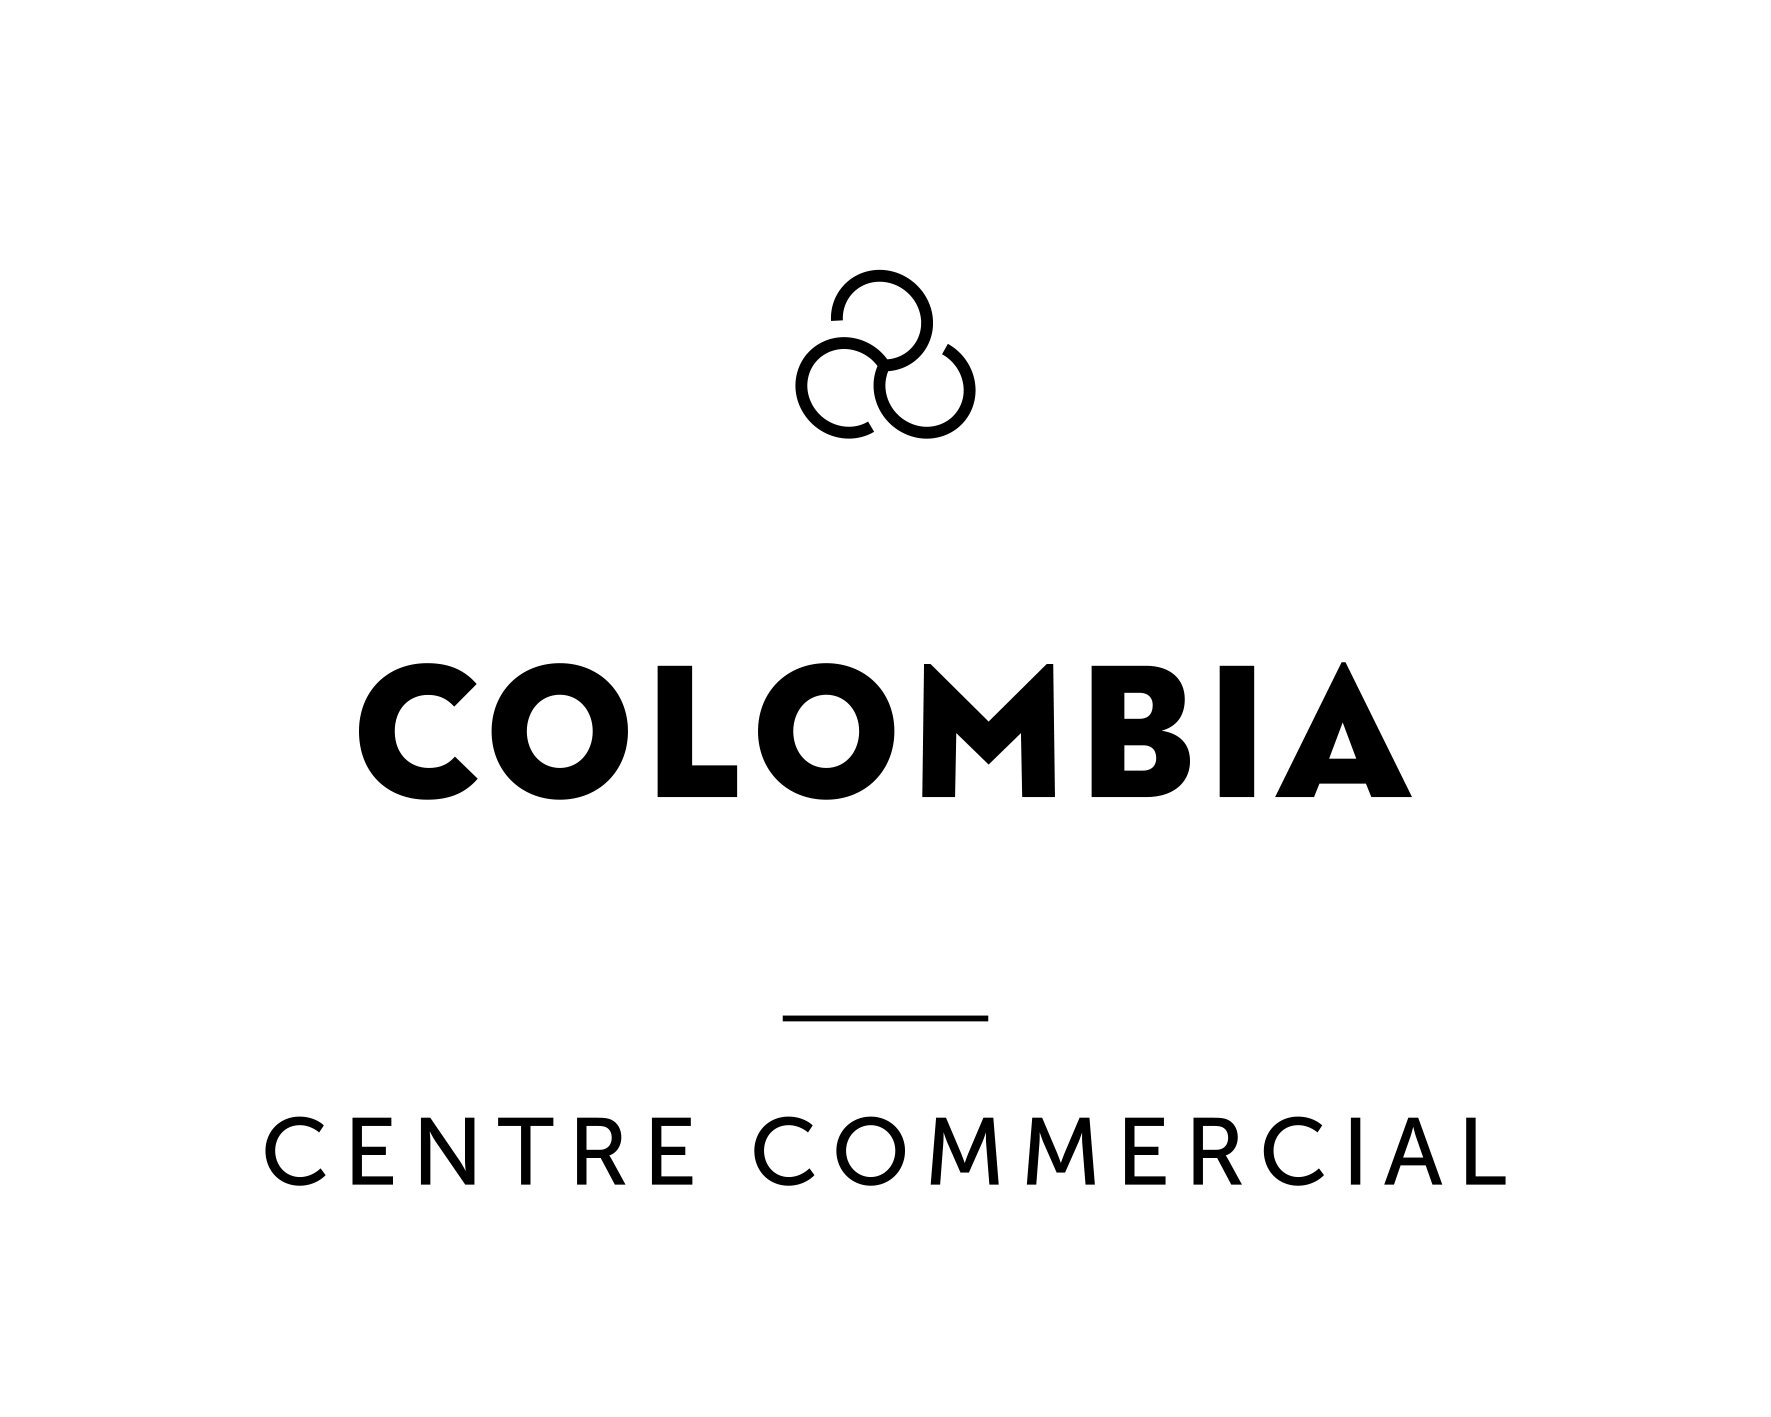 Colombia Signage logo-N (002).jpg